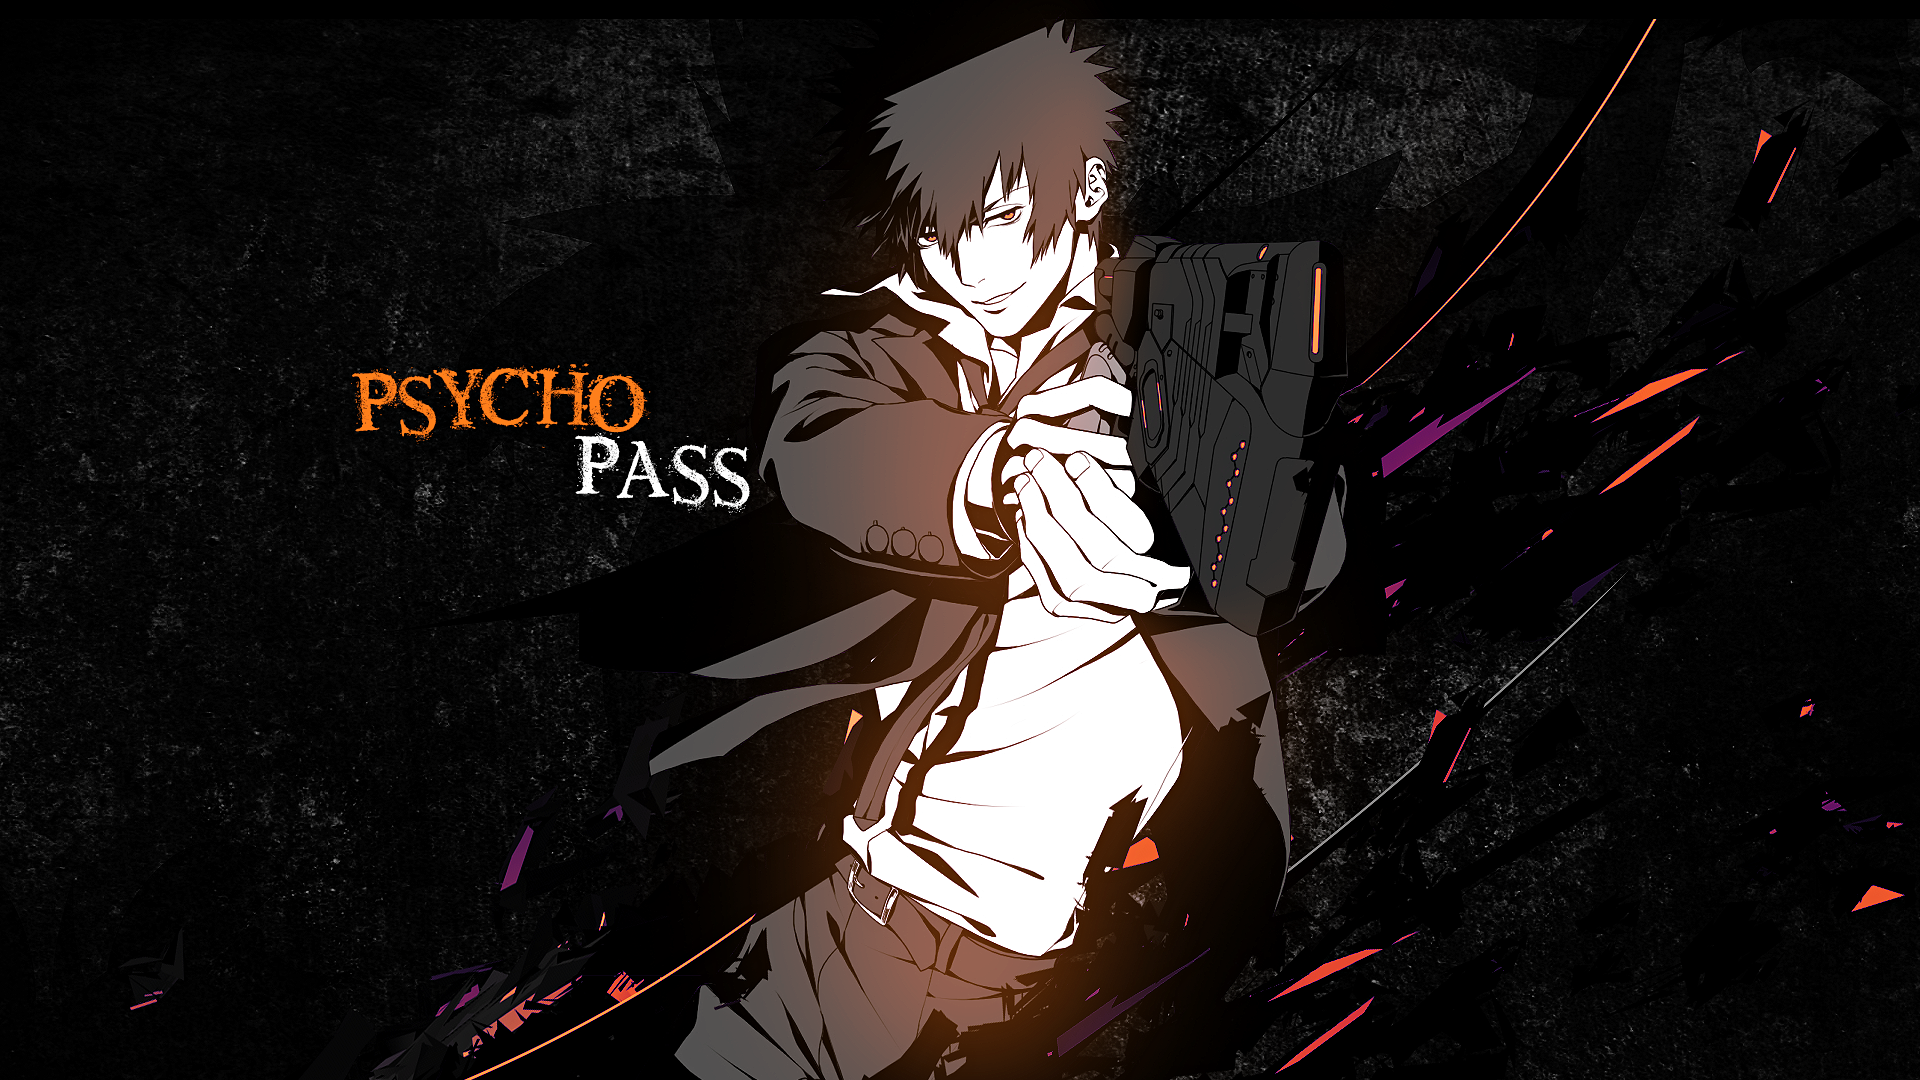 Featured image of post Psycho Pass Dominator Wallpaper Full hd p psychopass wallpapers hd desktop backgrounds wallpaper